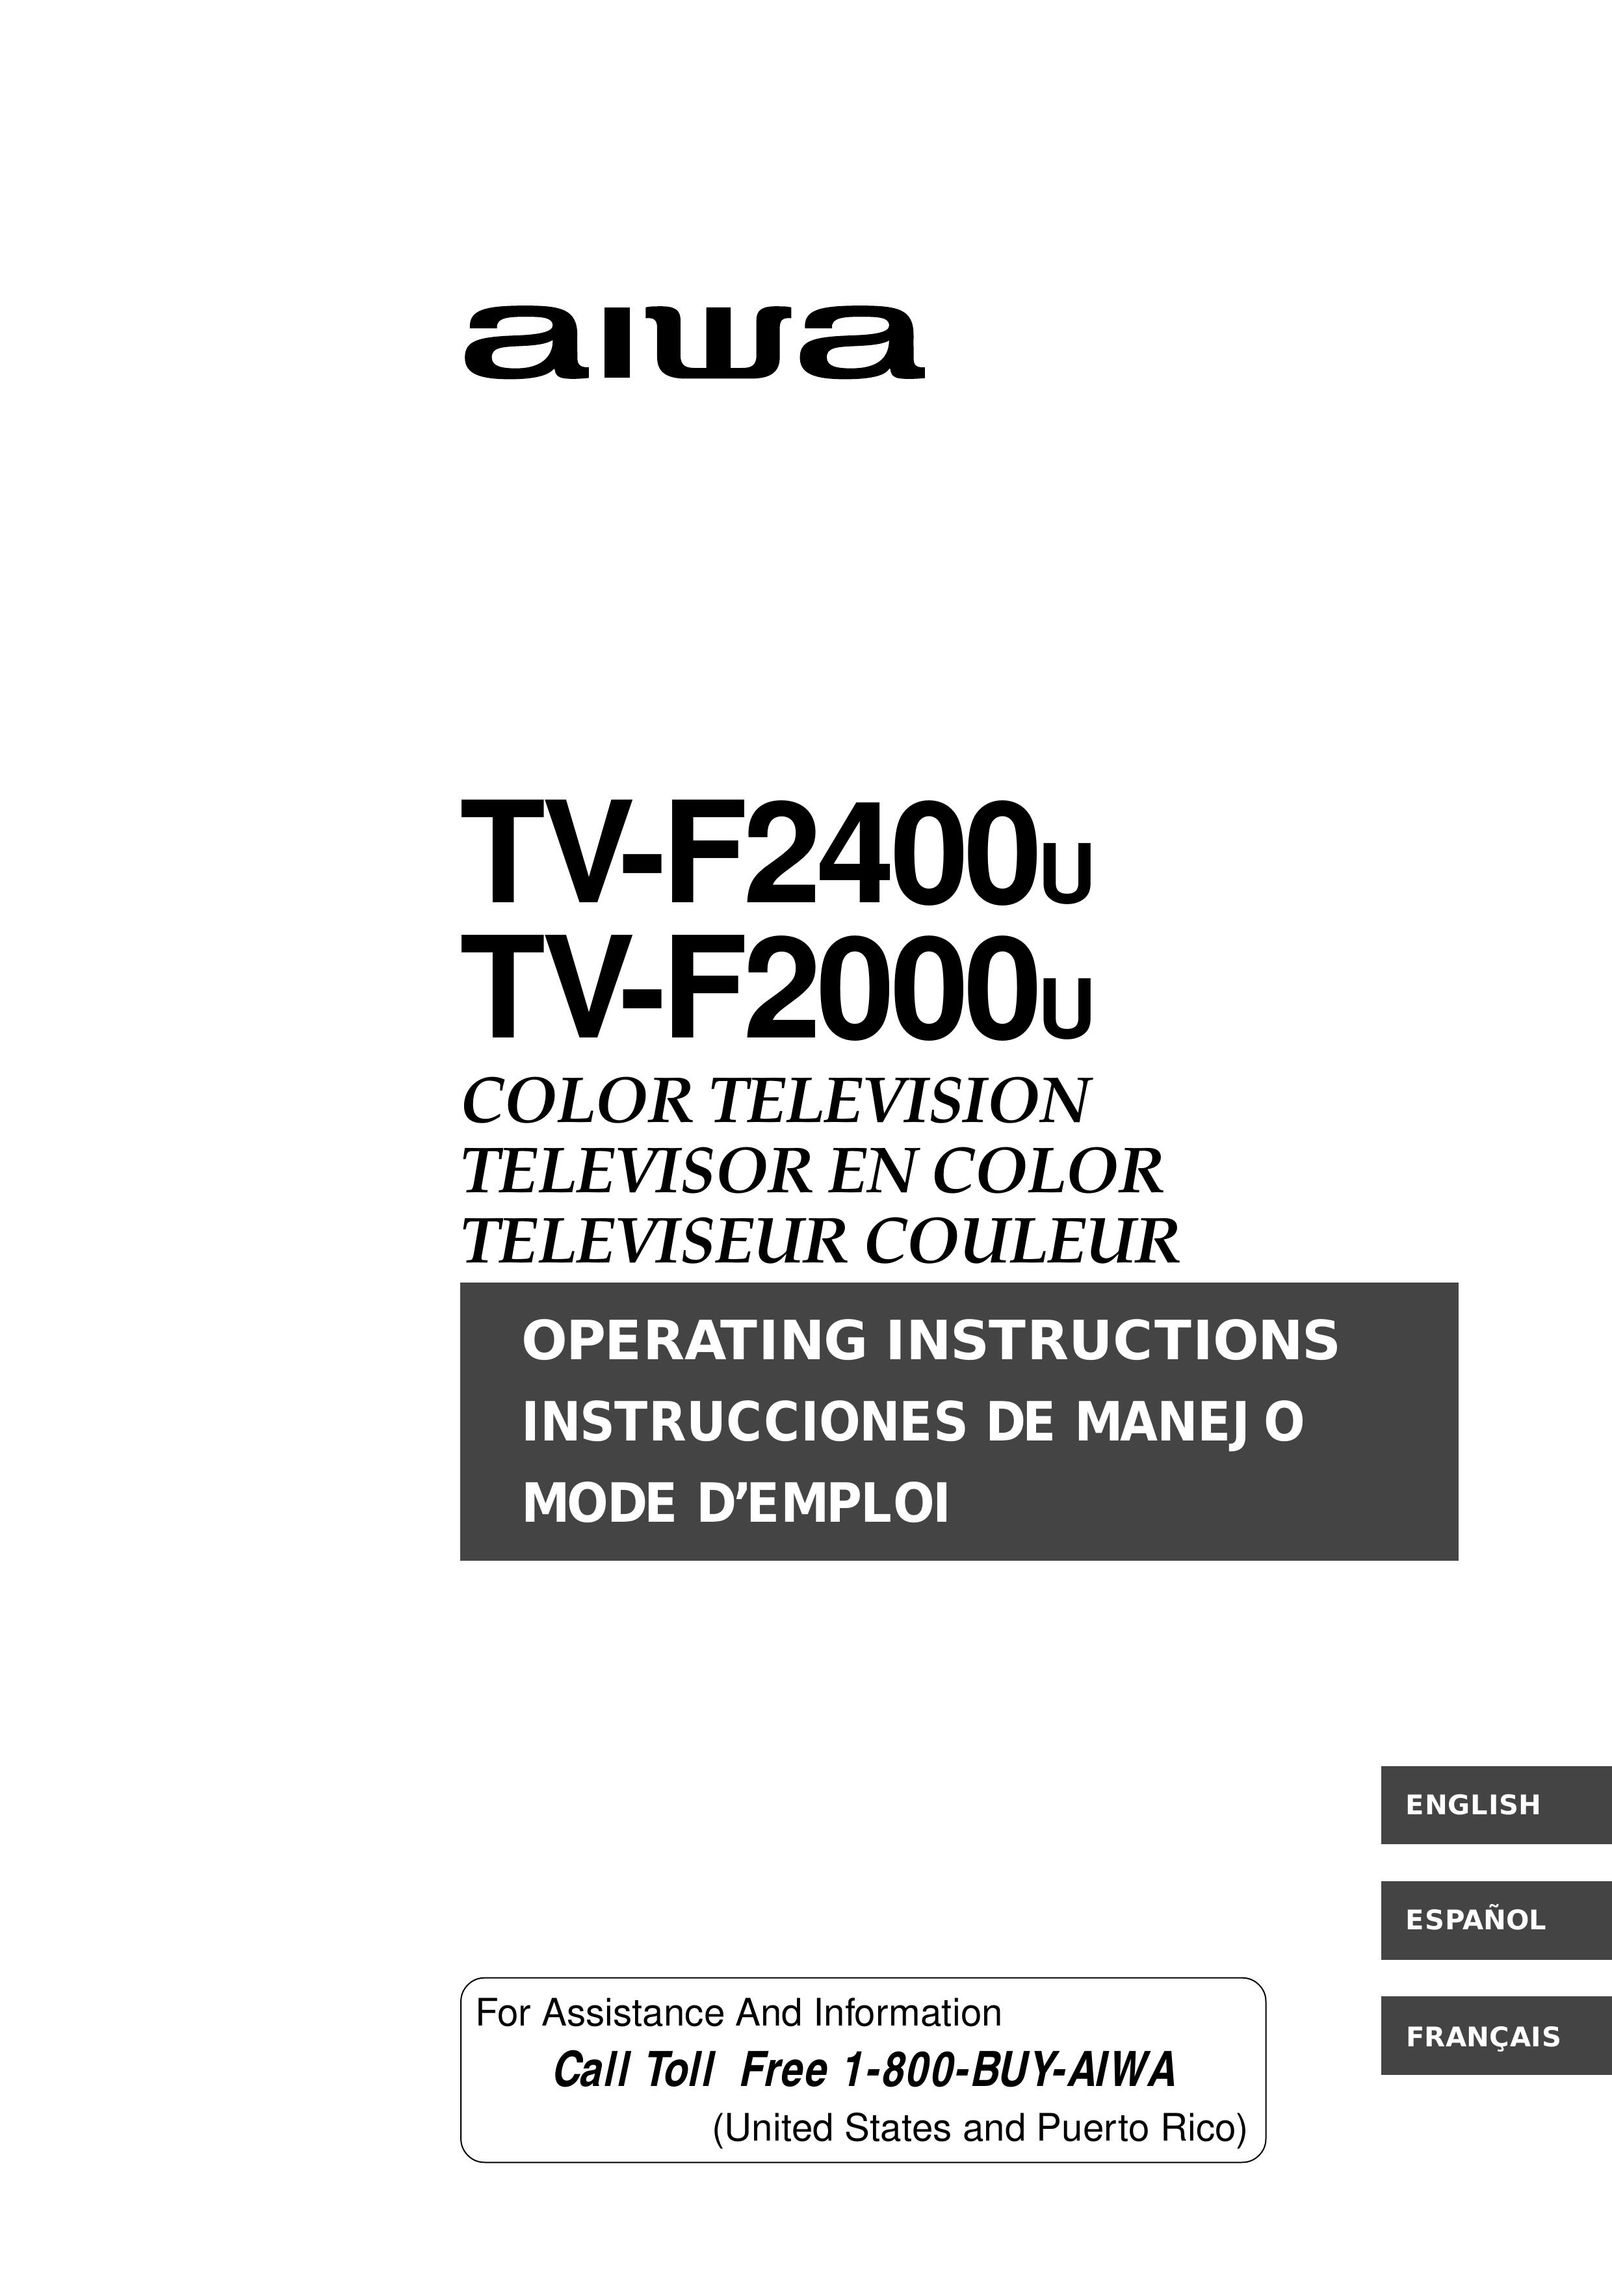 Aiwa TV-F2400u, TV-F2000u CRT Television User Manual